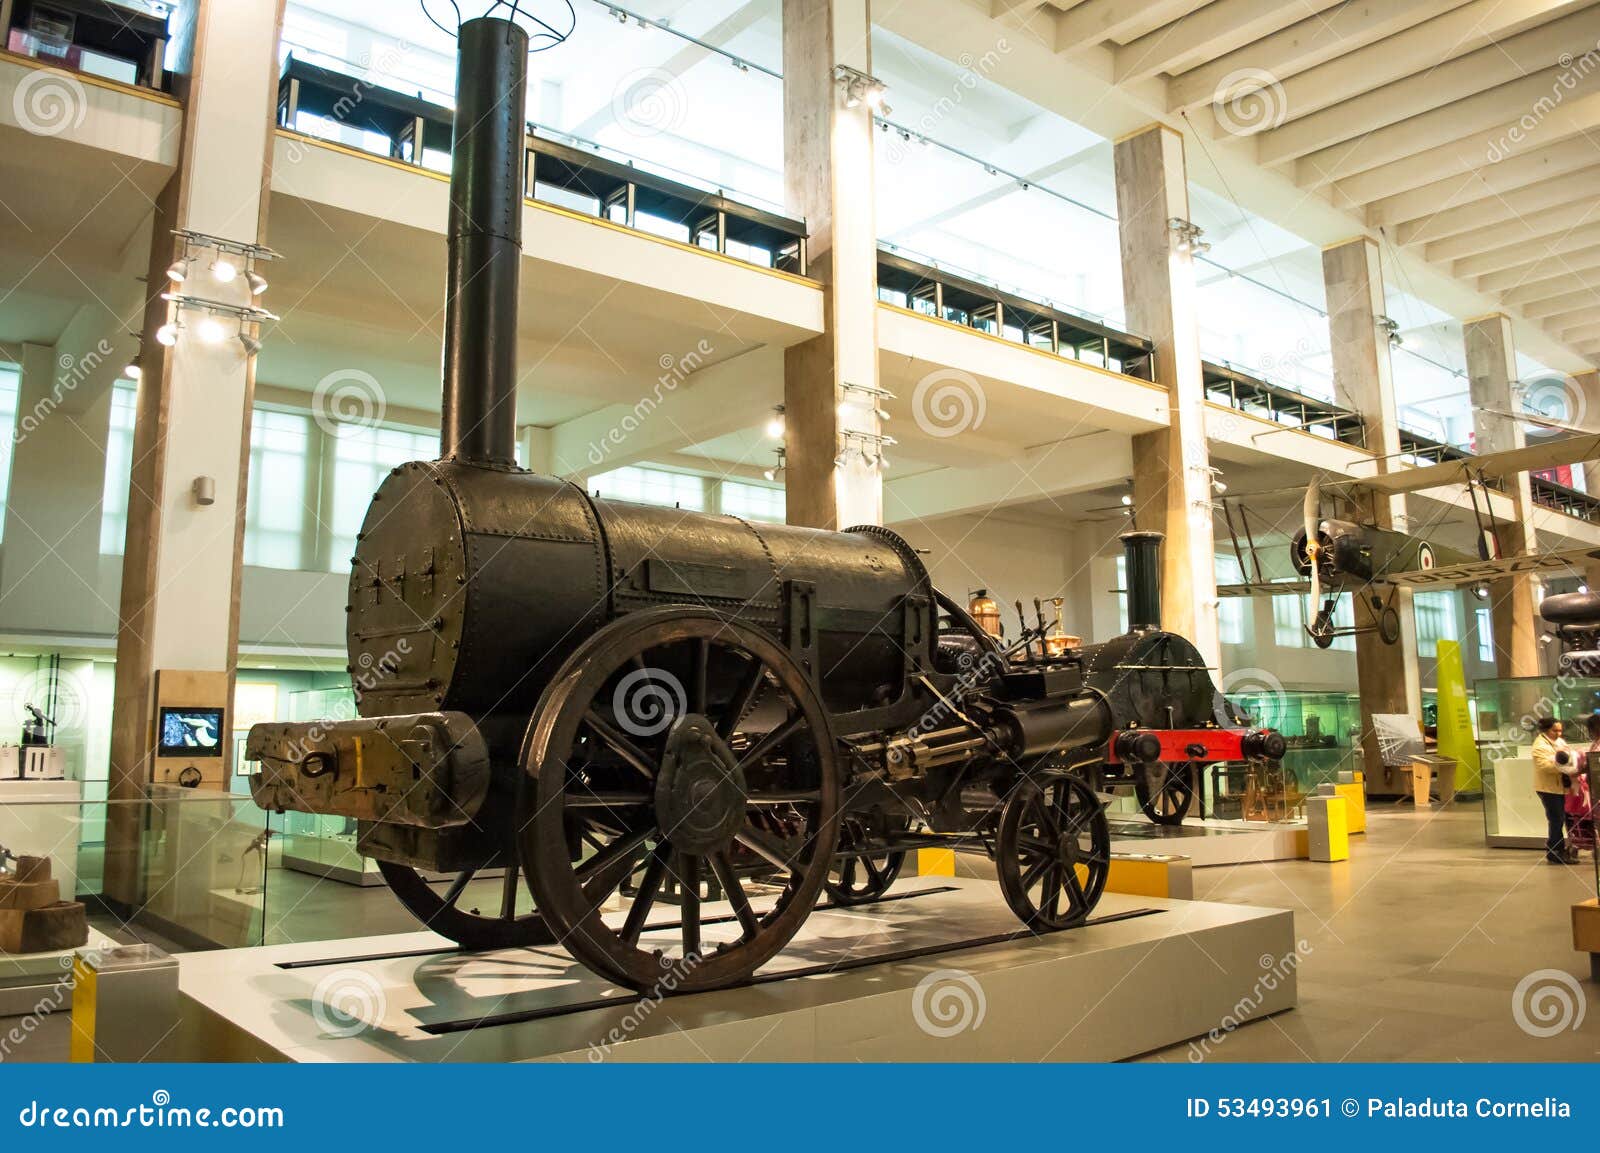 London steam museum фото 88